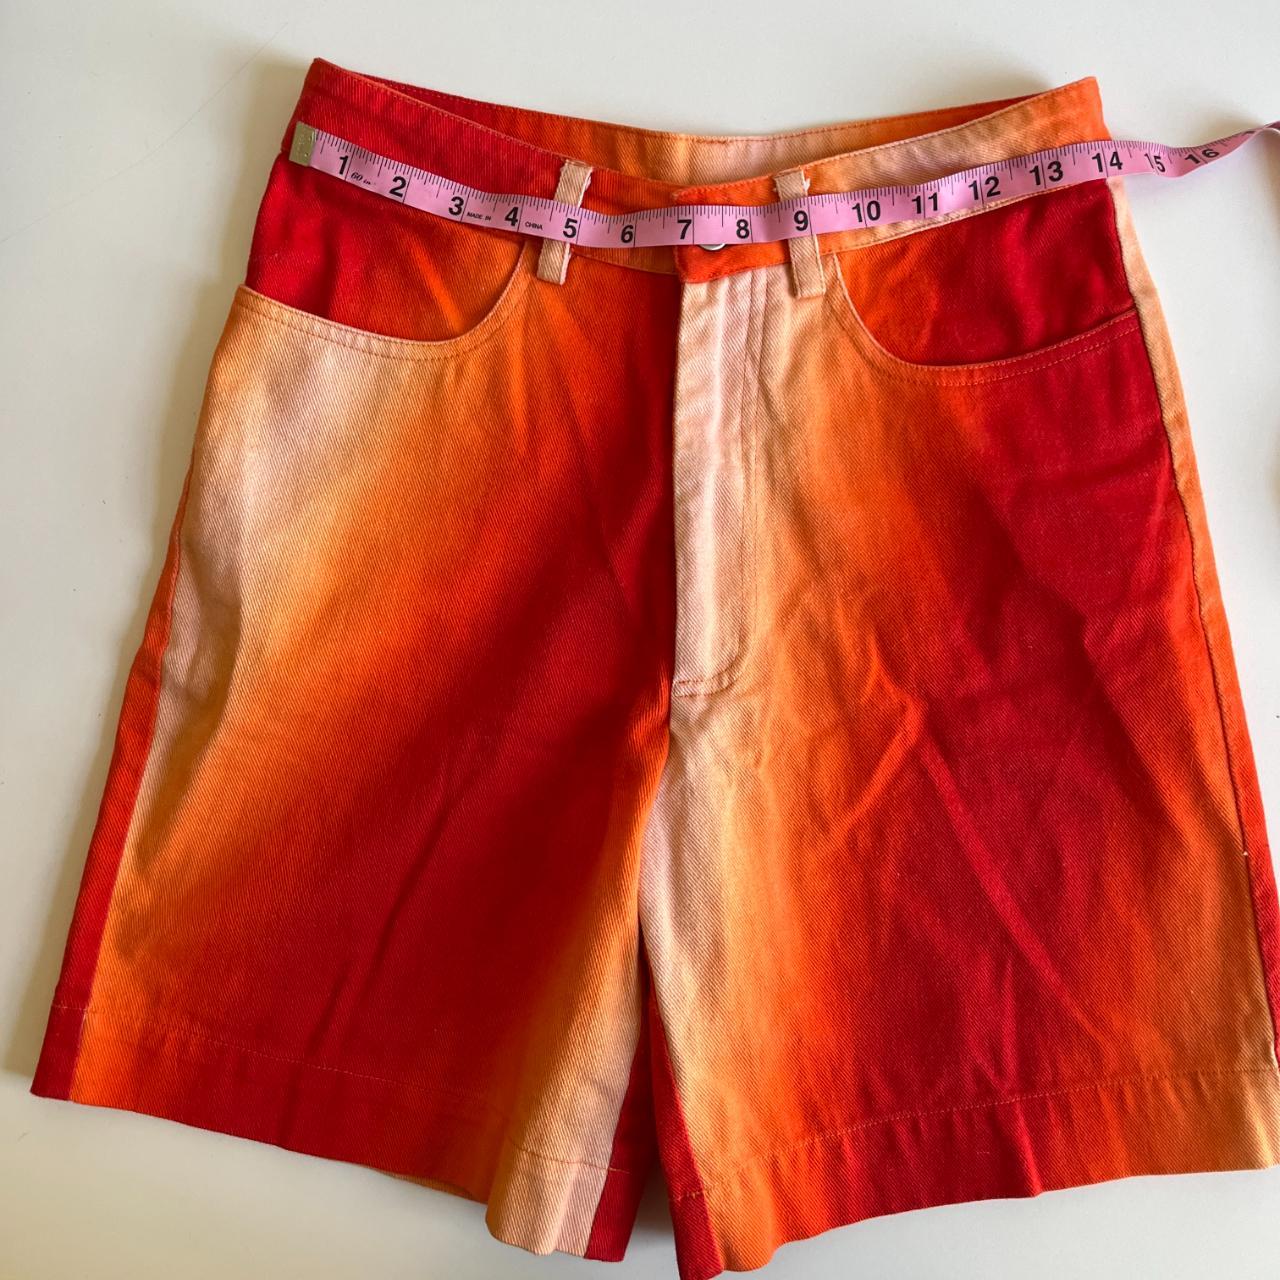 Hosbjerg Women's Orange Shorts (4)